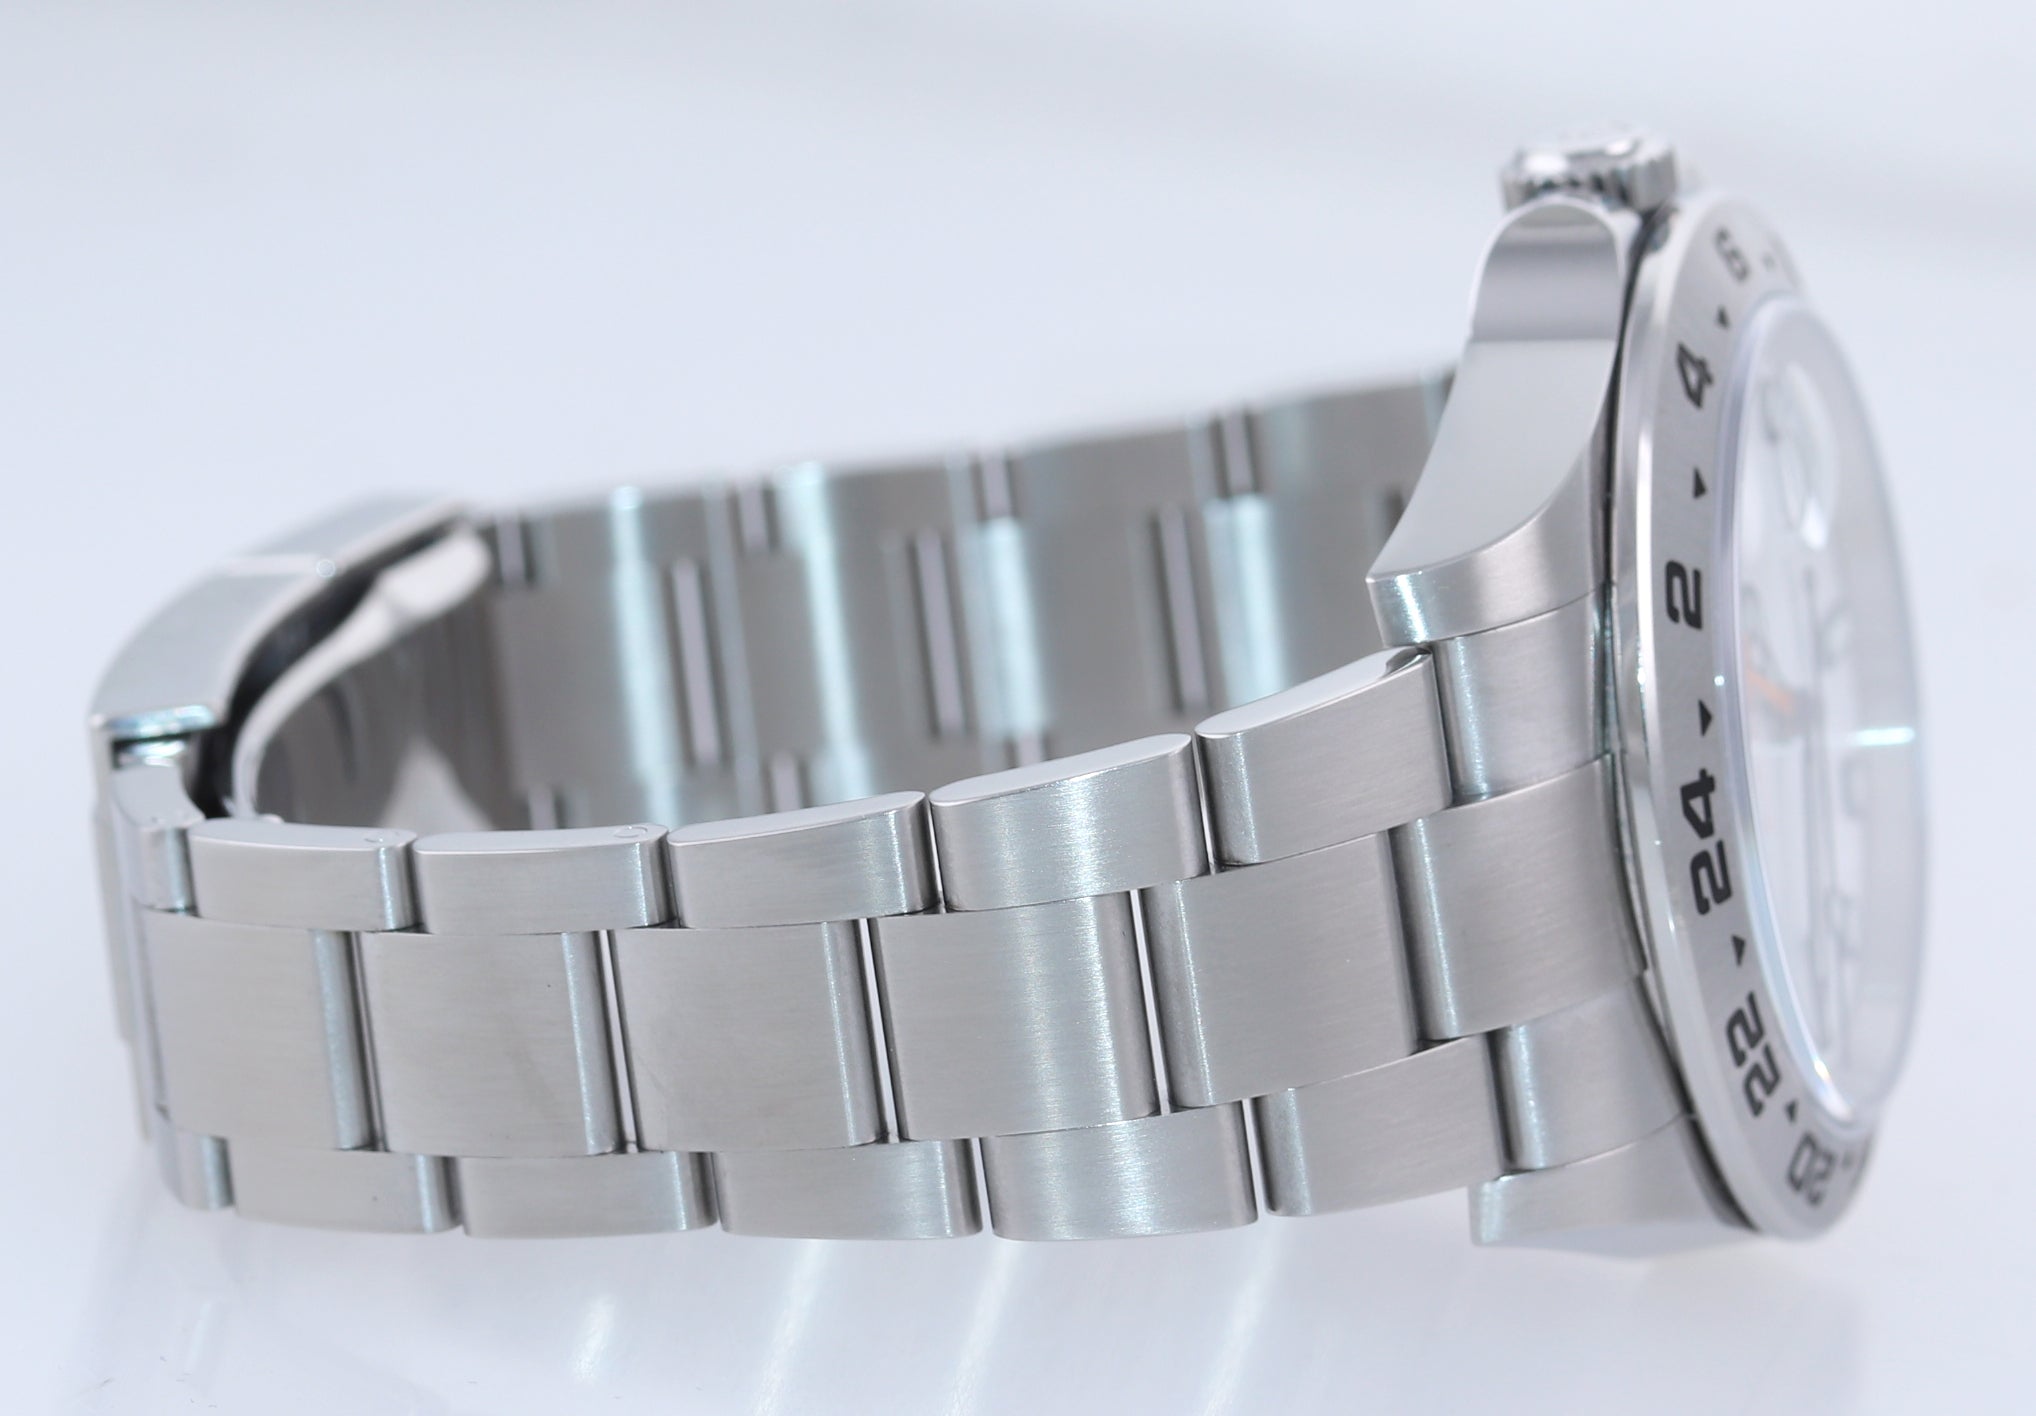 NEW PAPERS 2019 Rolex Explorer II 42mm 216570 White Polar Steel GMT Date Watch